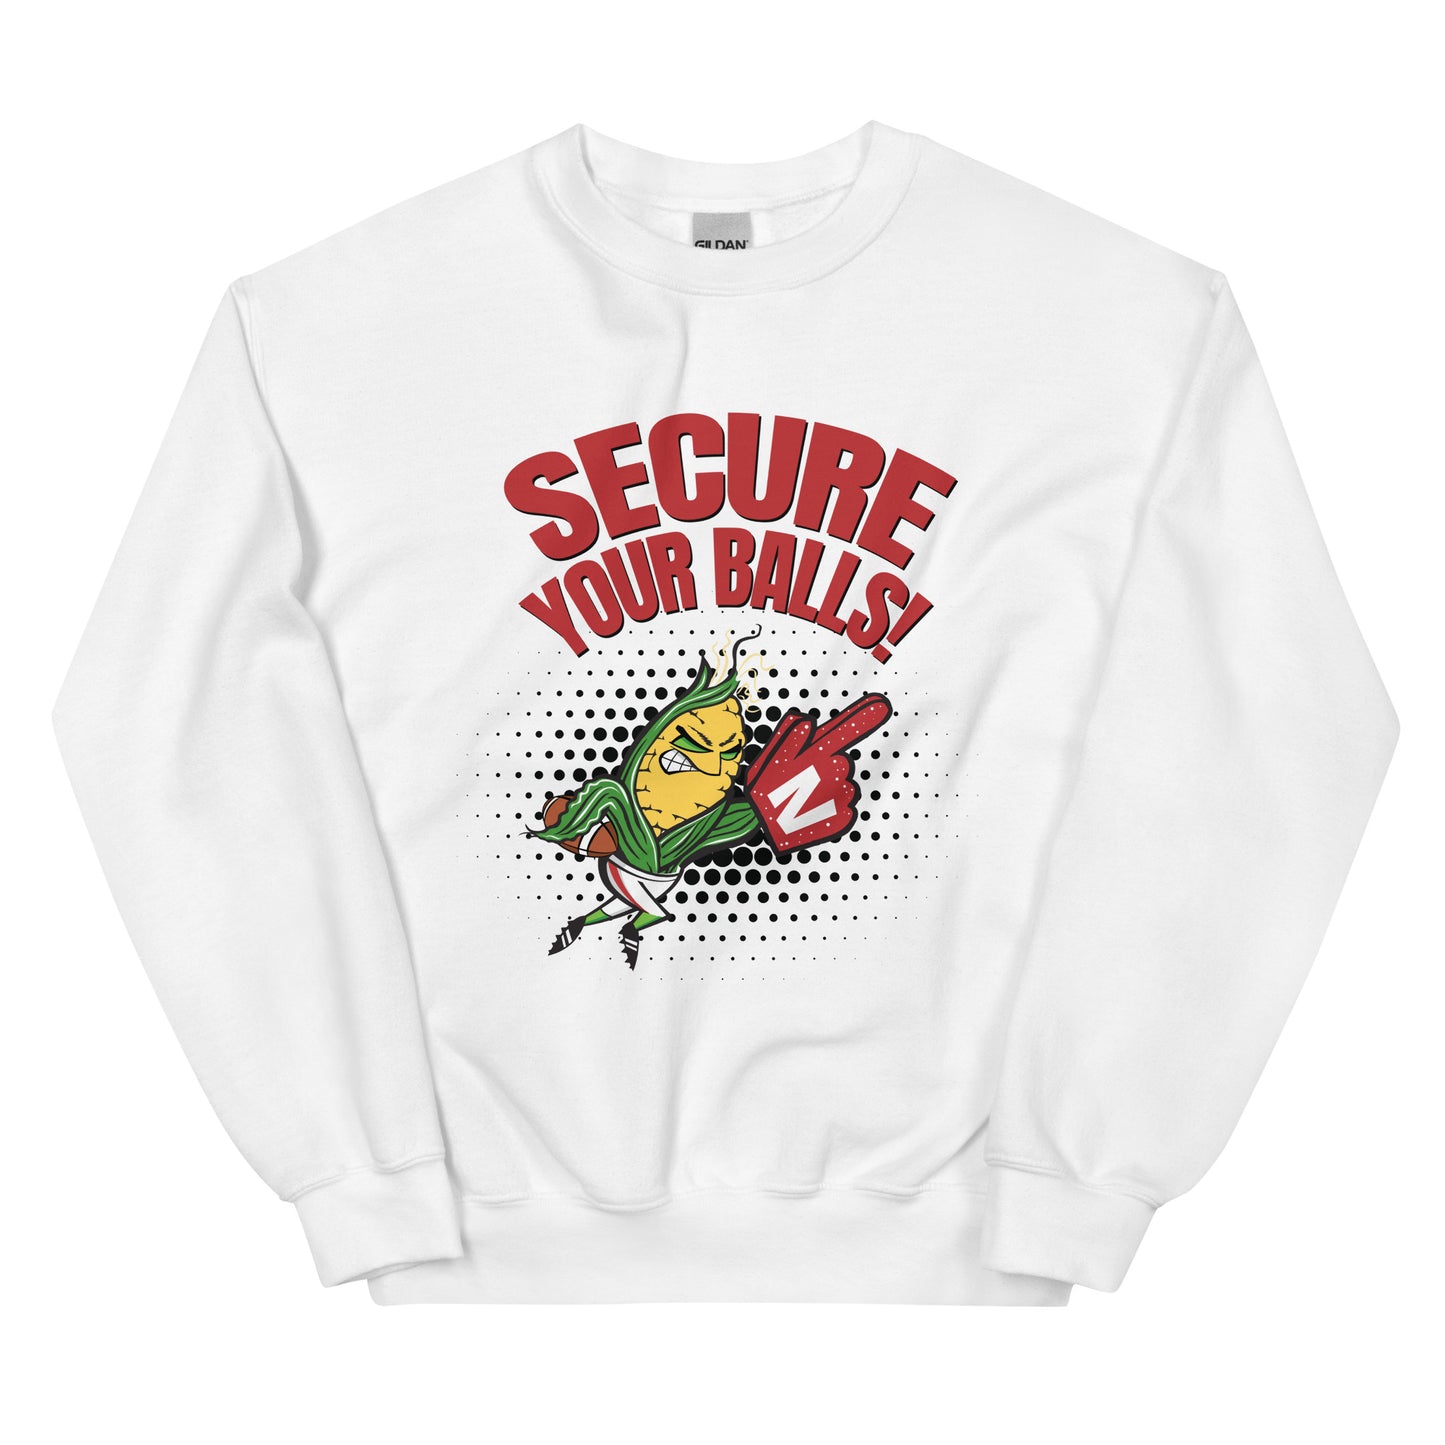 Secure Your Balls! - Unisex Sweatshirt